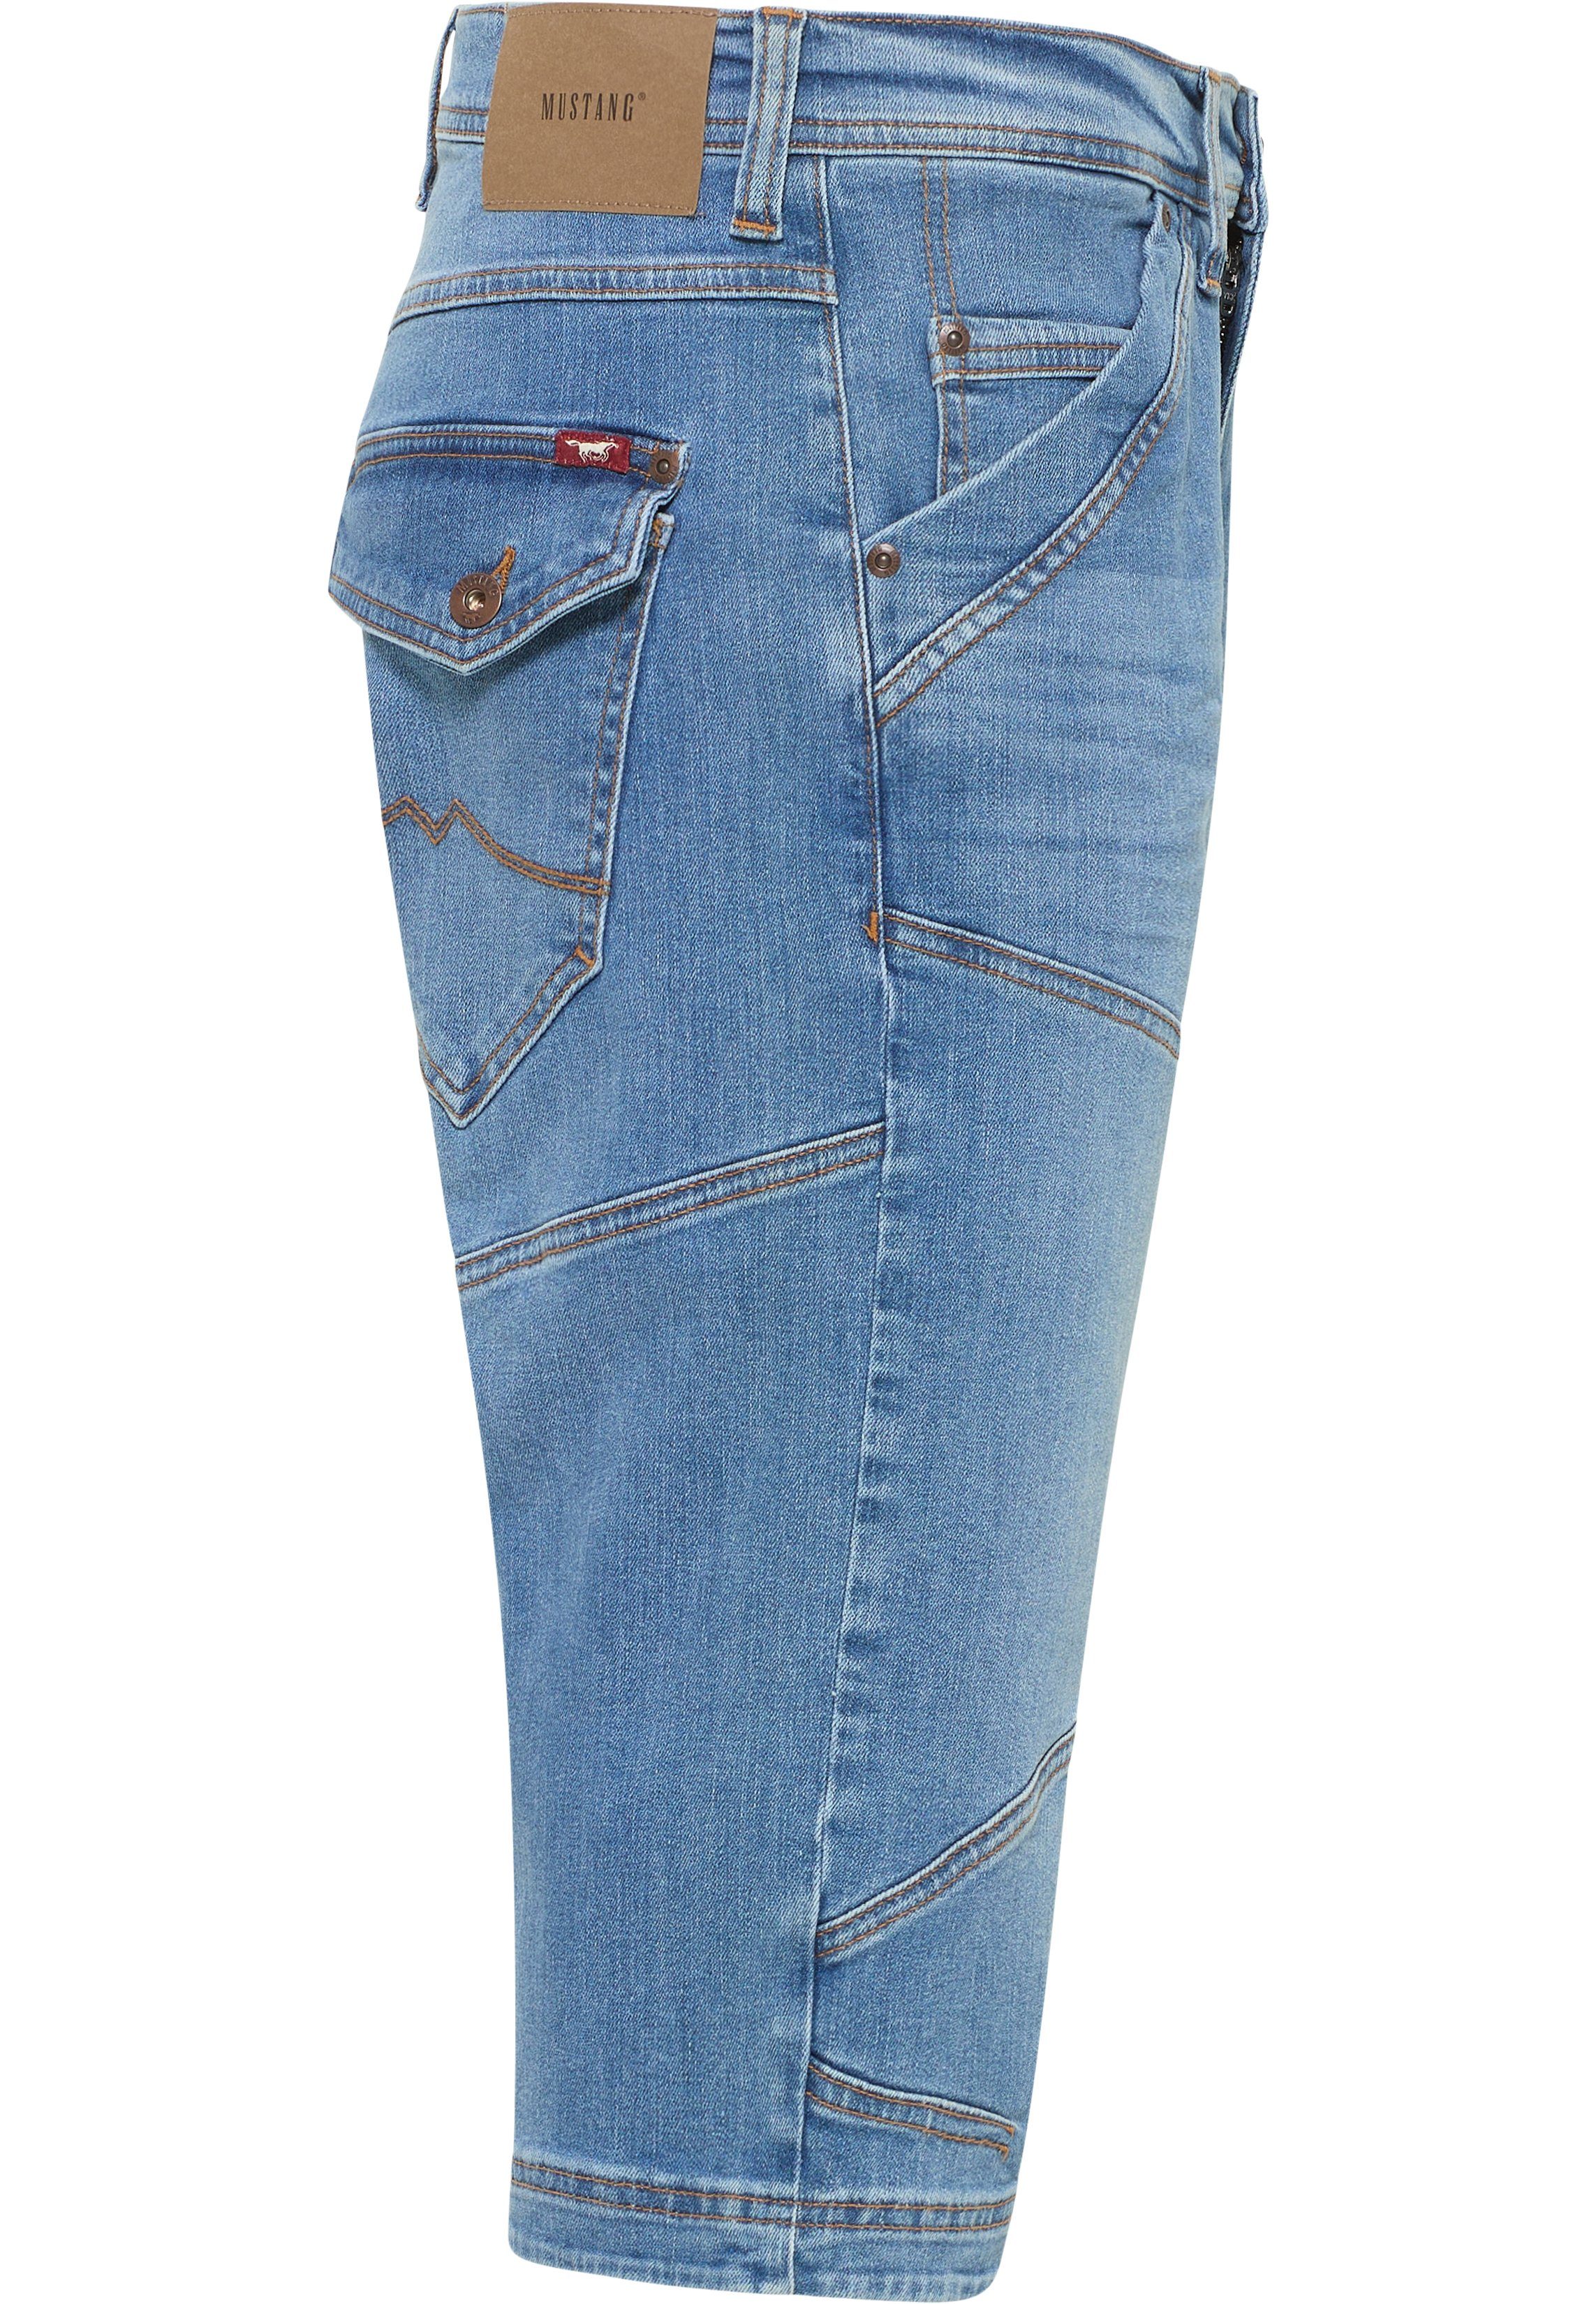 MUSTANG Jeansshorts Style Shorts Fremont blau-5000583